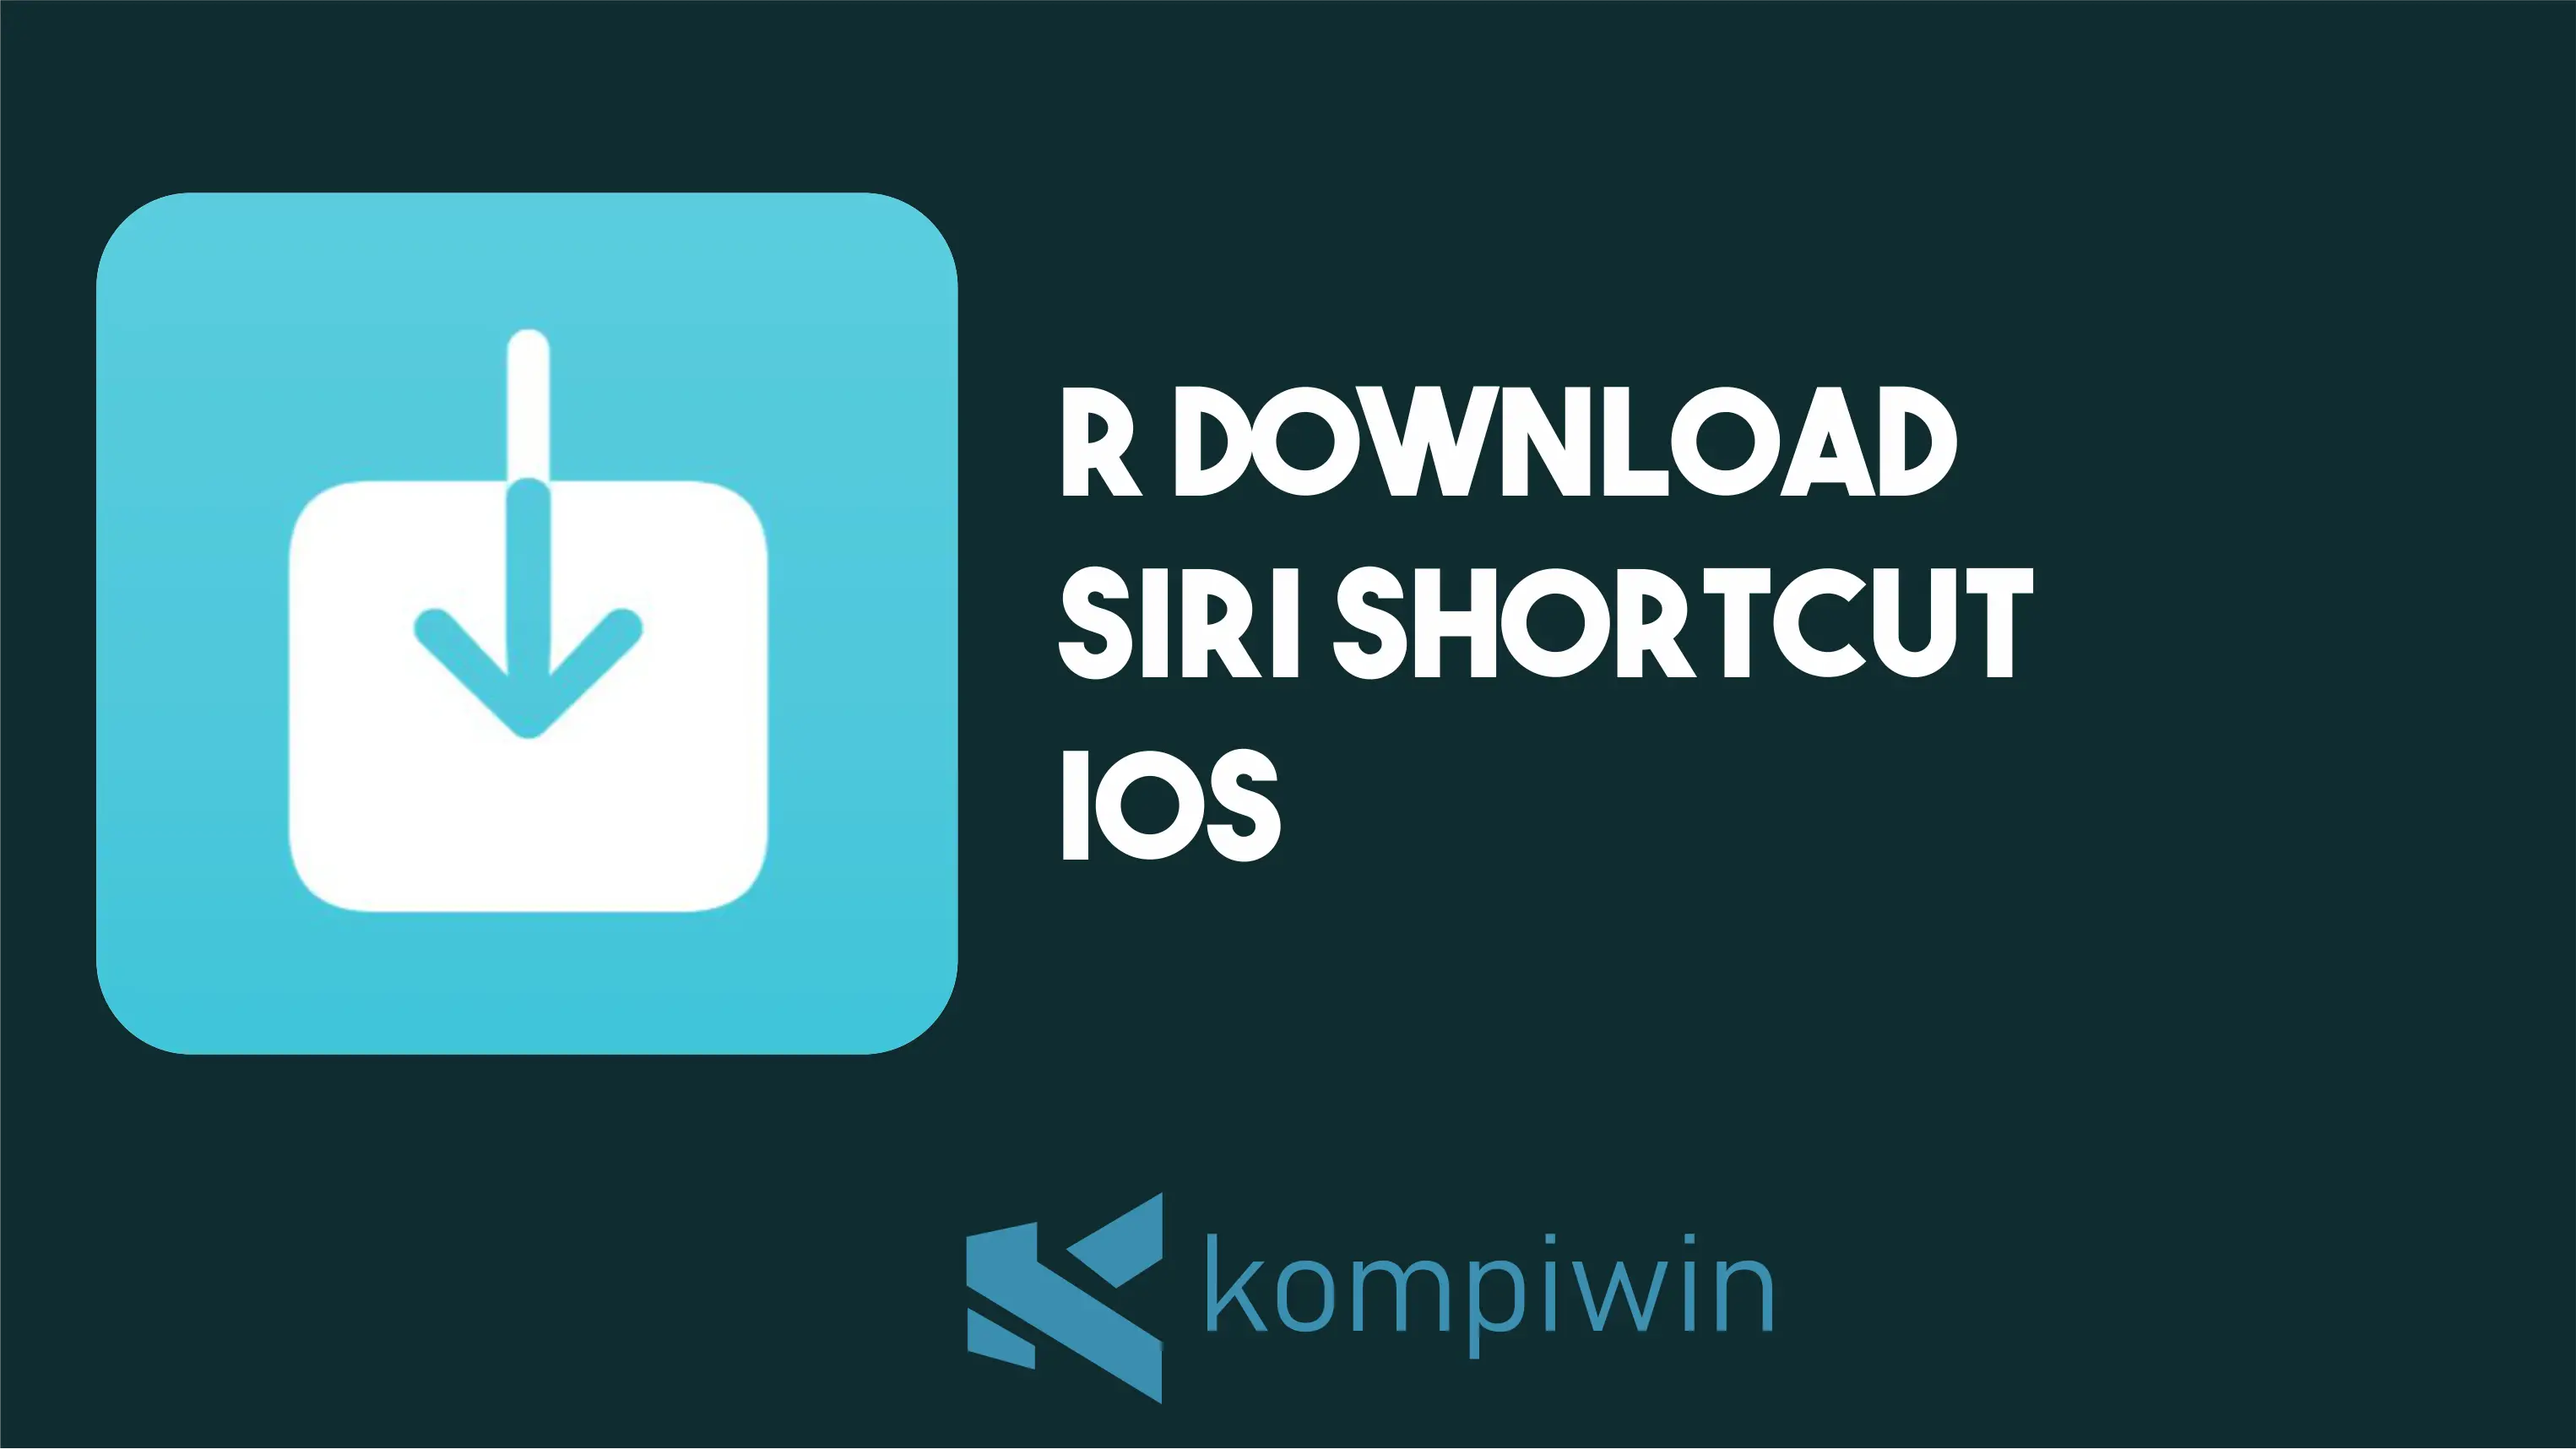 R Download Siri Shortcut iOS